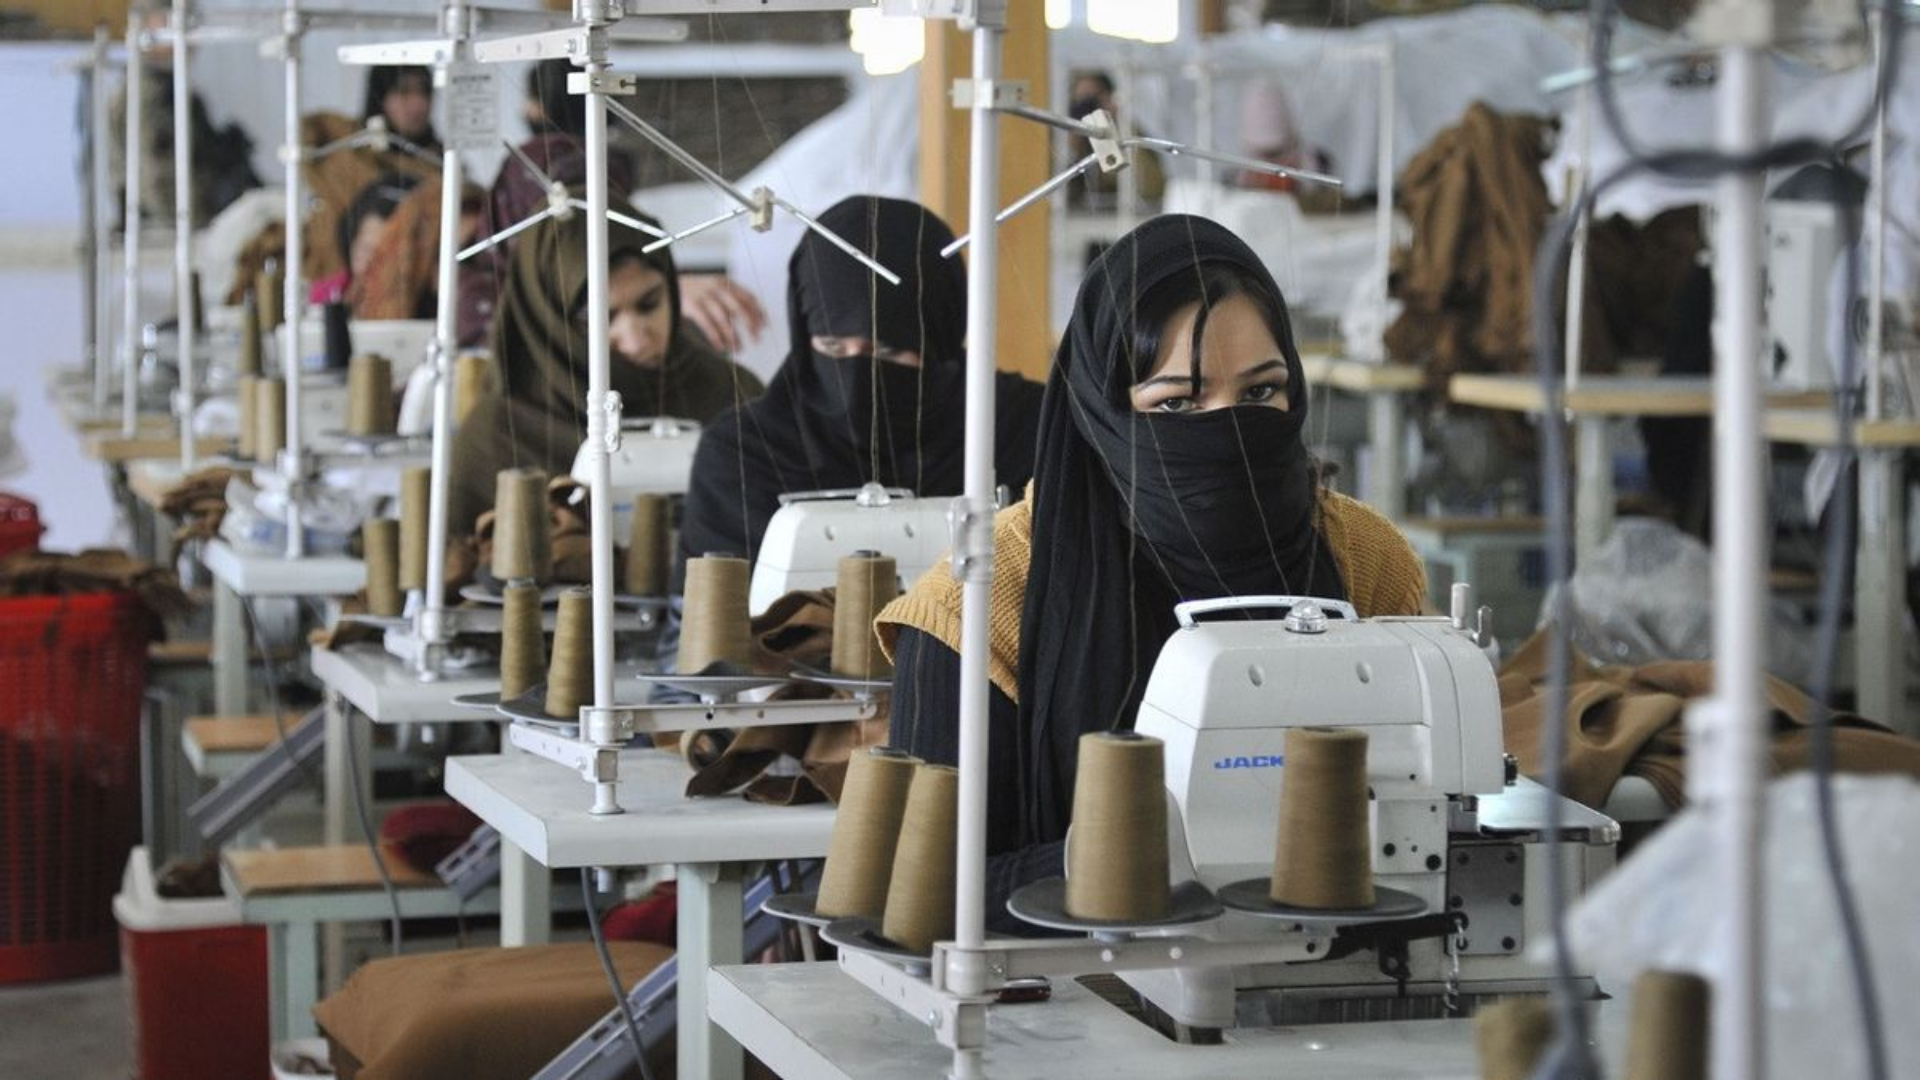 Women’s Market in Mazar-e-Sharif Closes due to Taliban policies